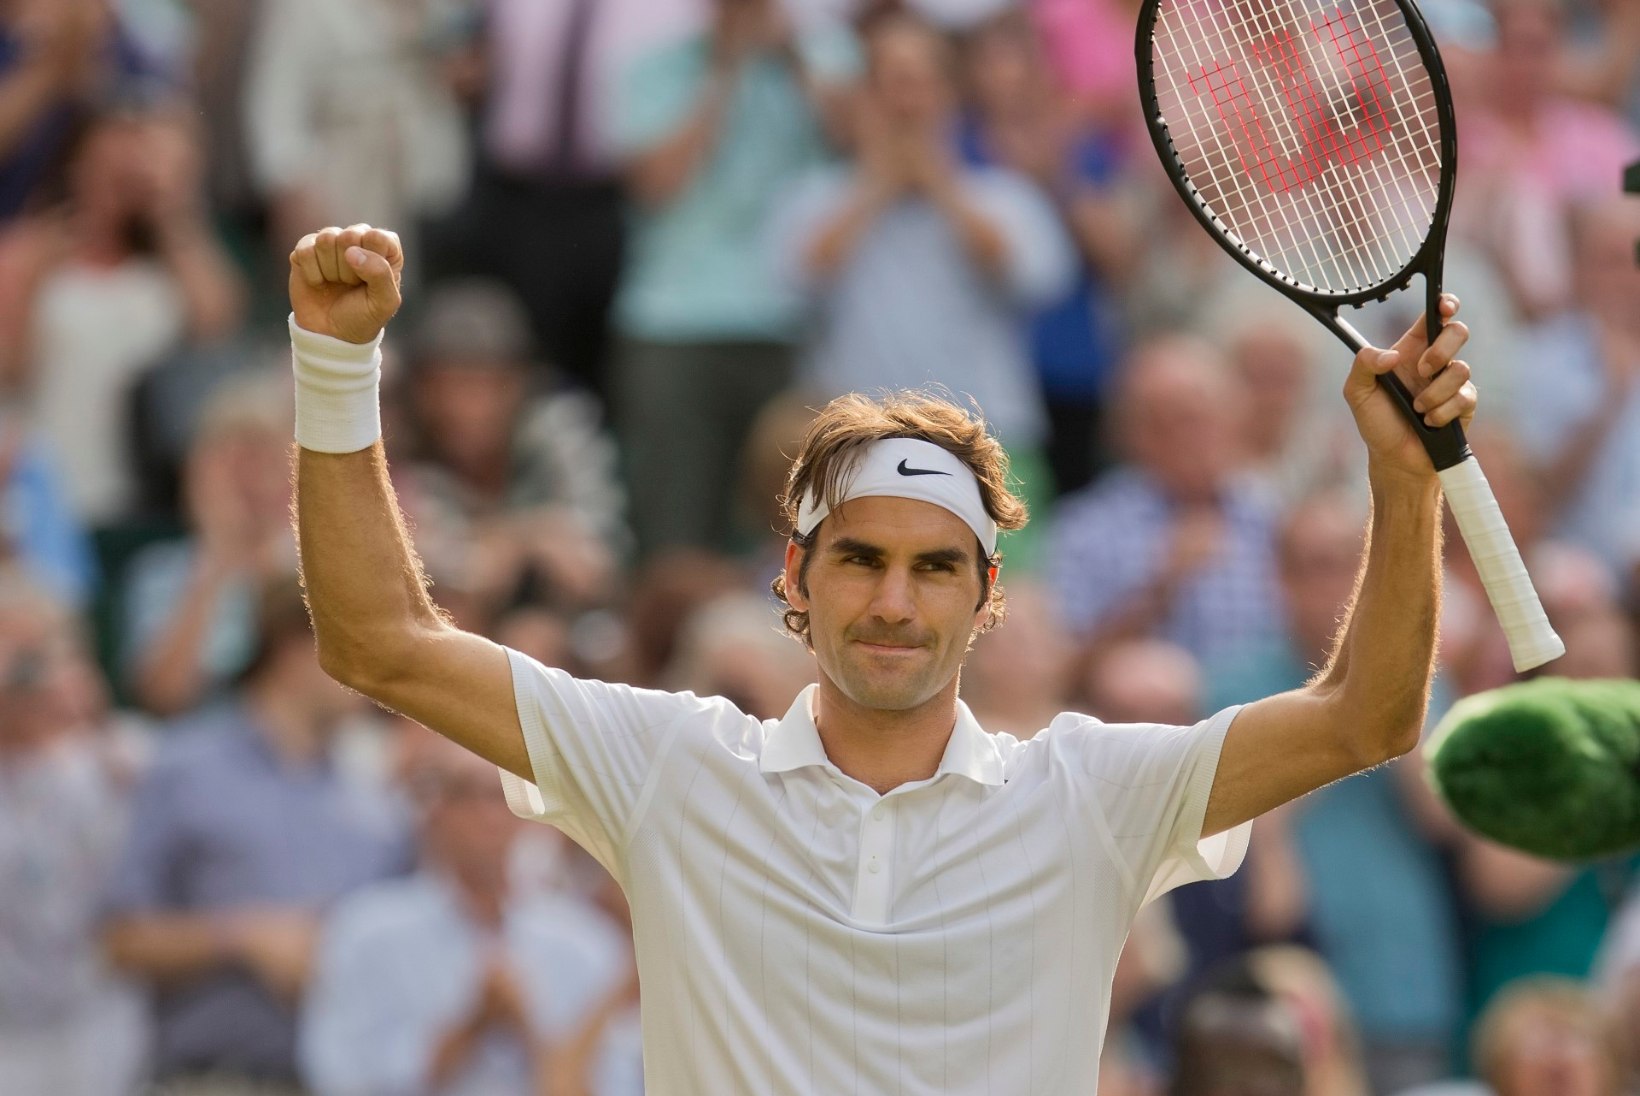 Finaaliklassika: Federer – Djokovic!